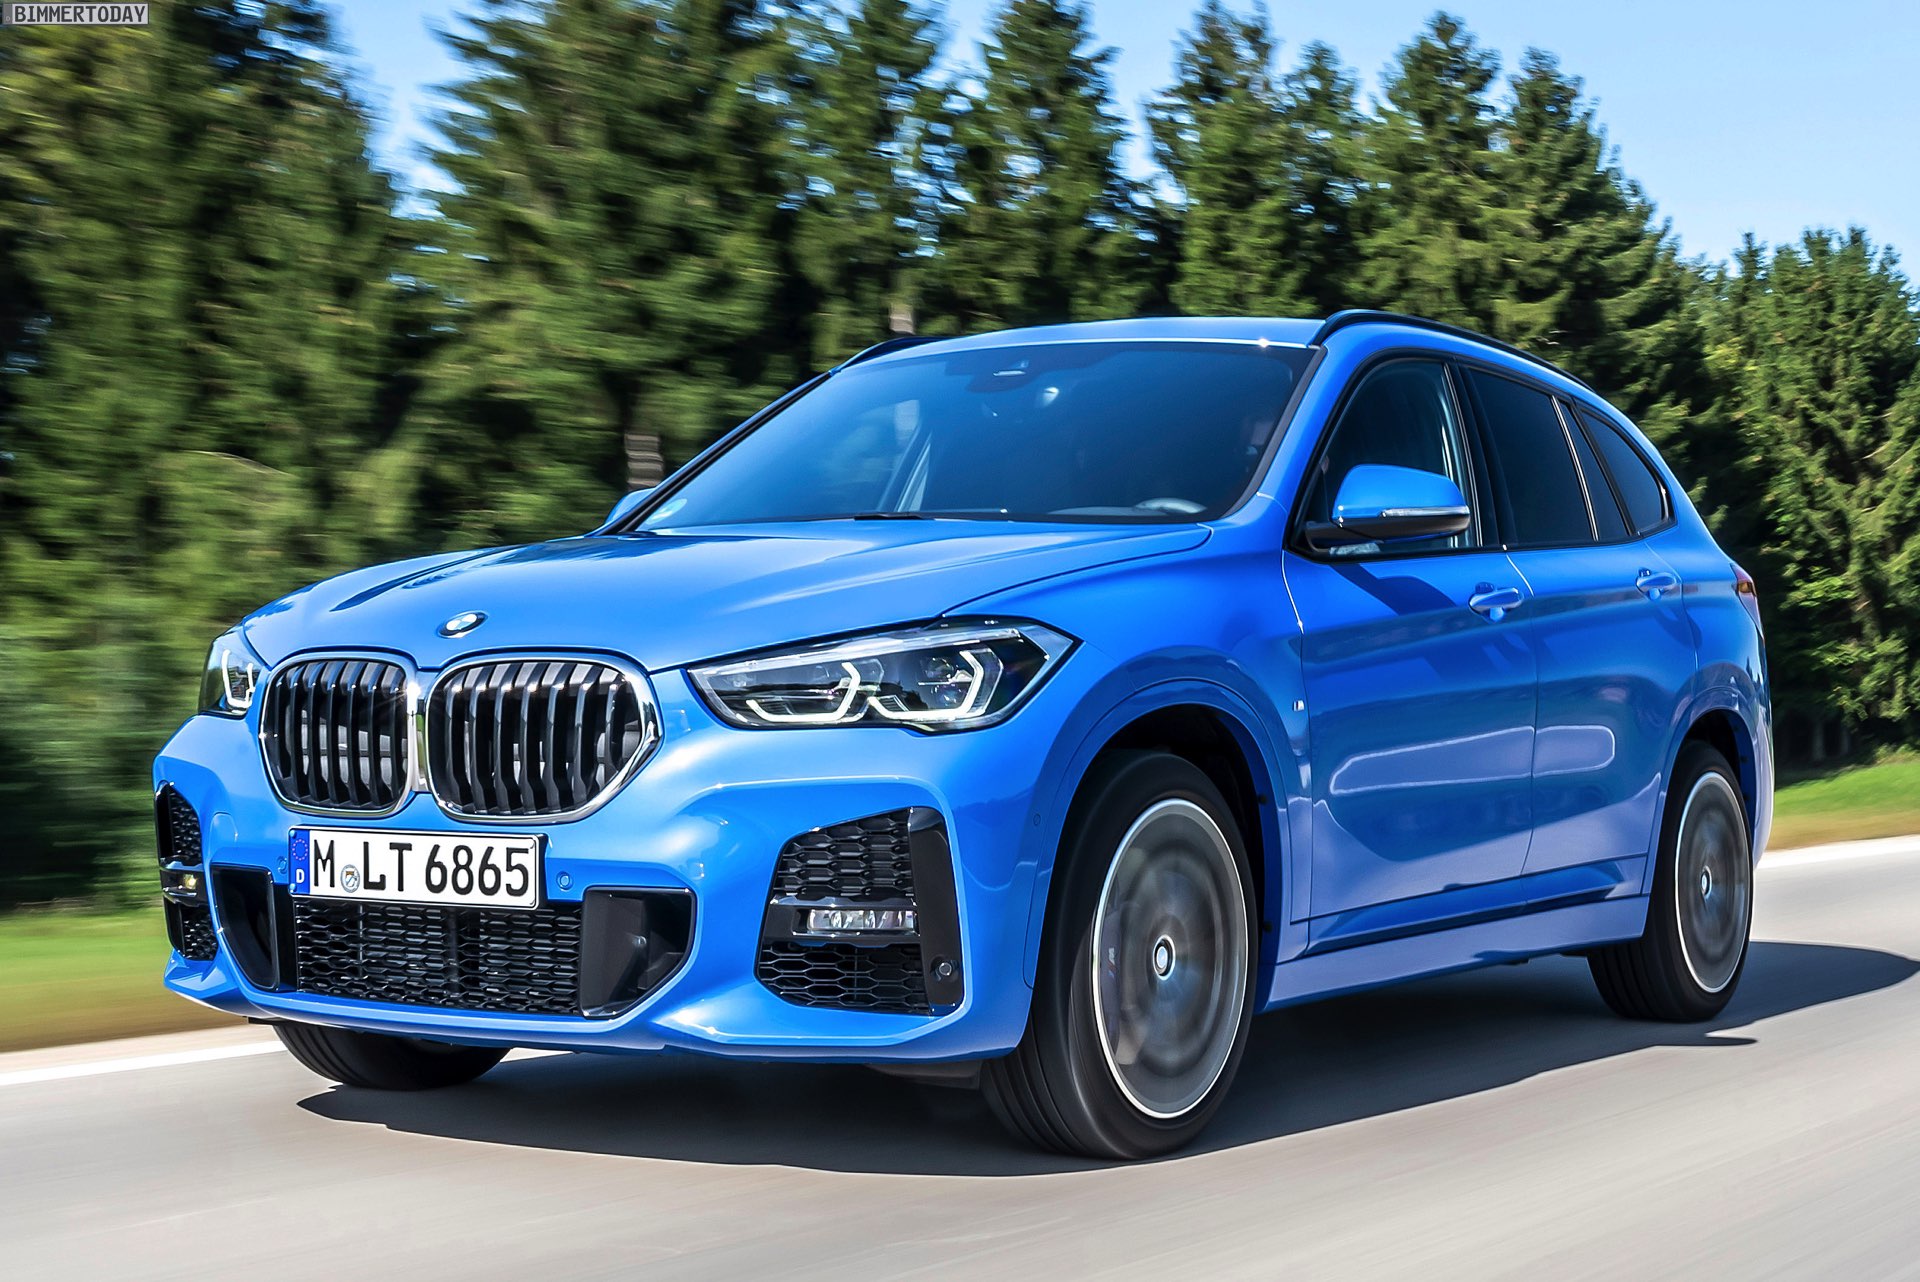 Fahrbericht BMW X1 2019 Frischer Look vertraute Technik